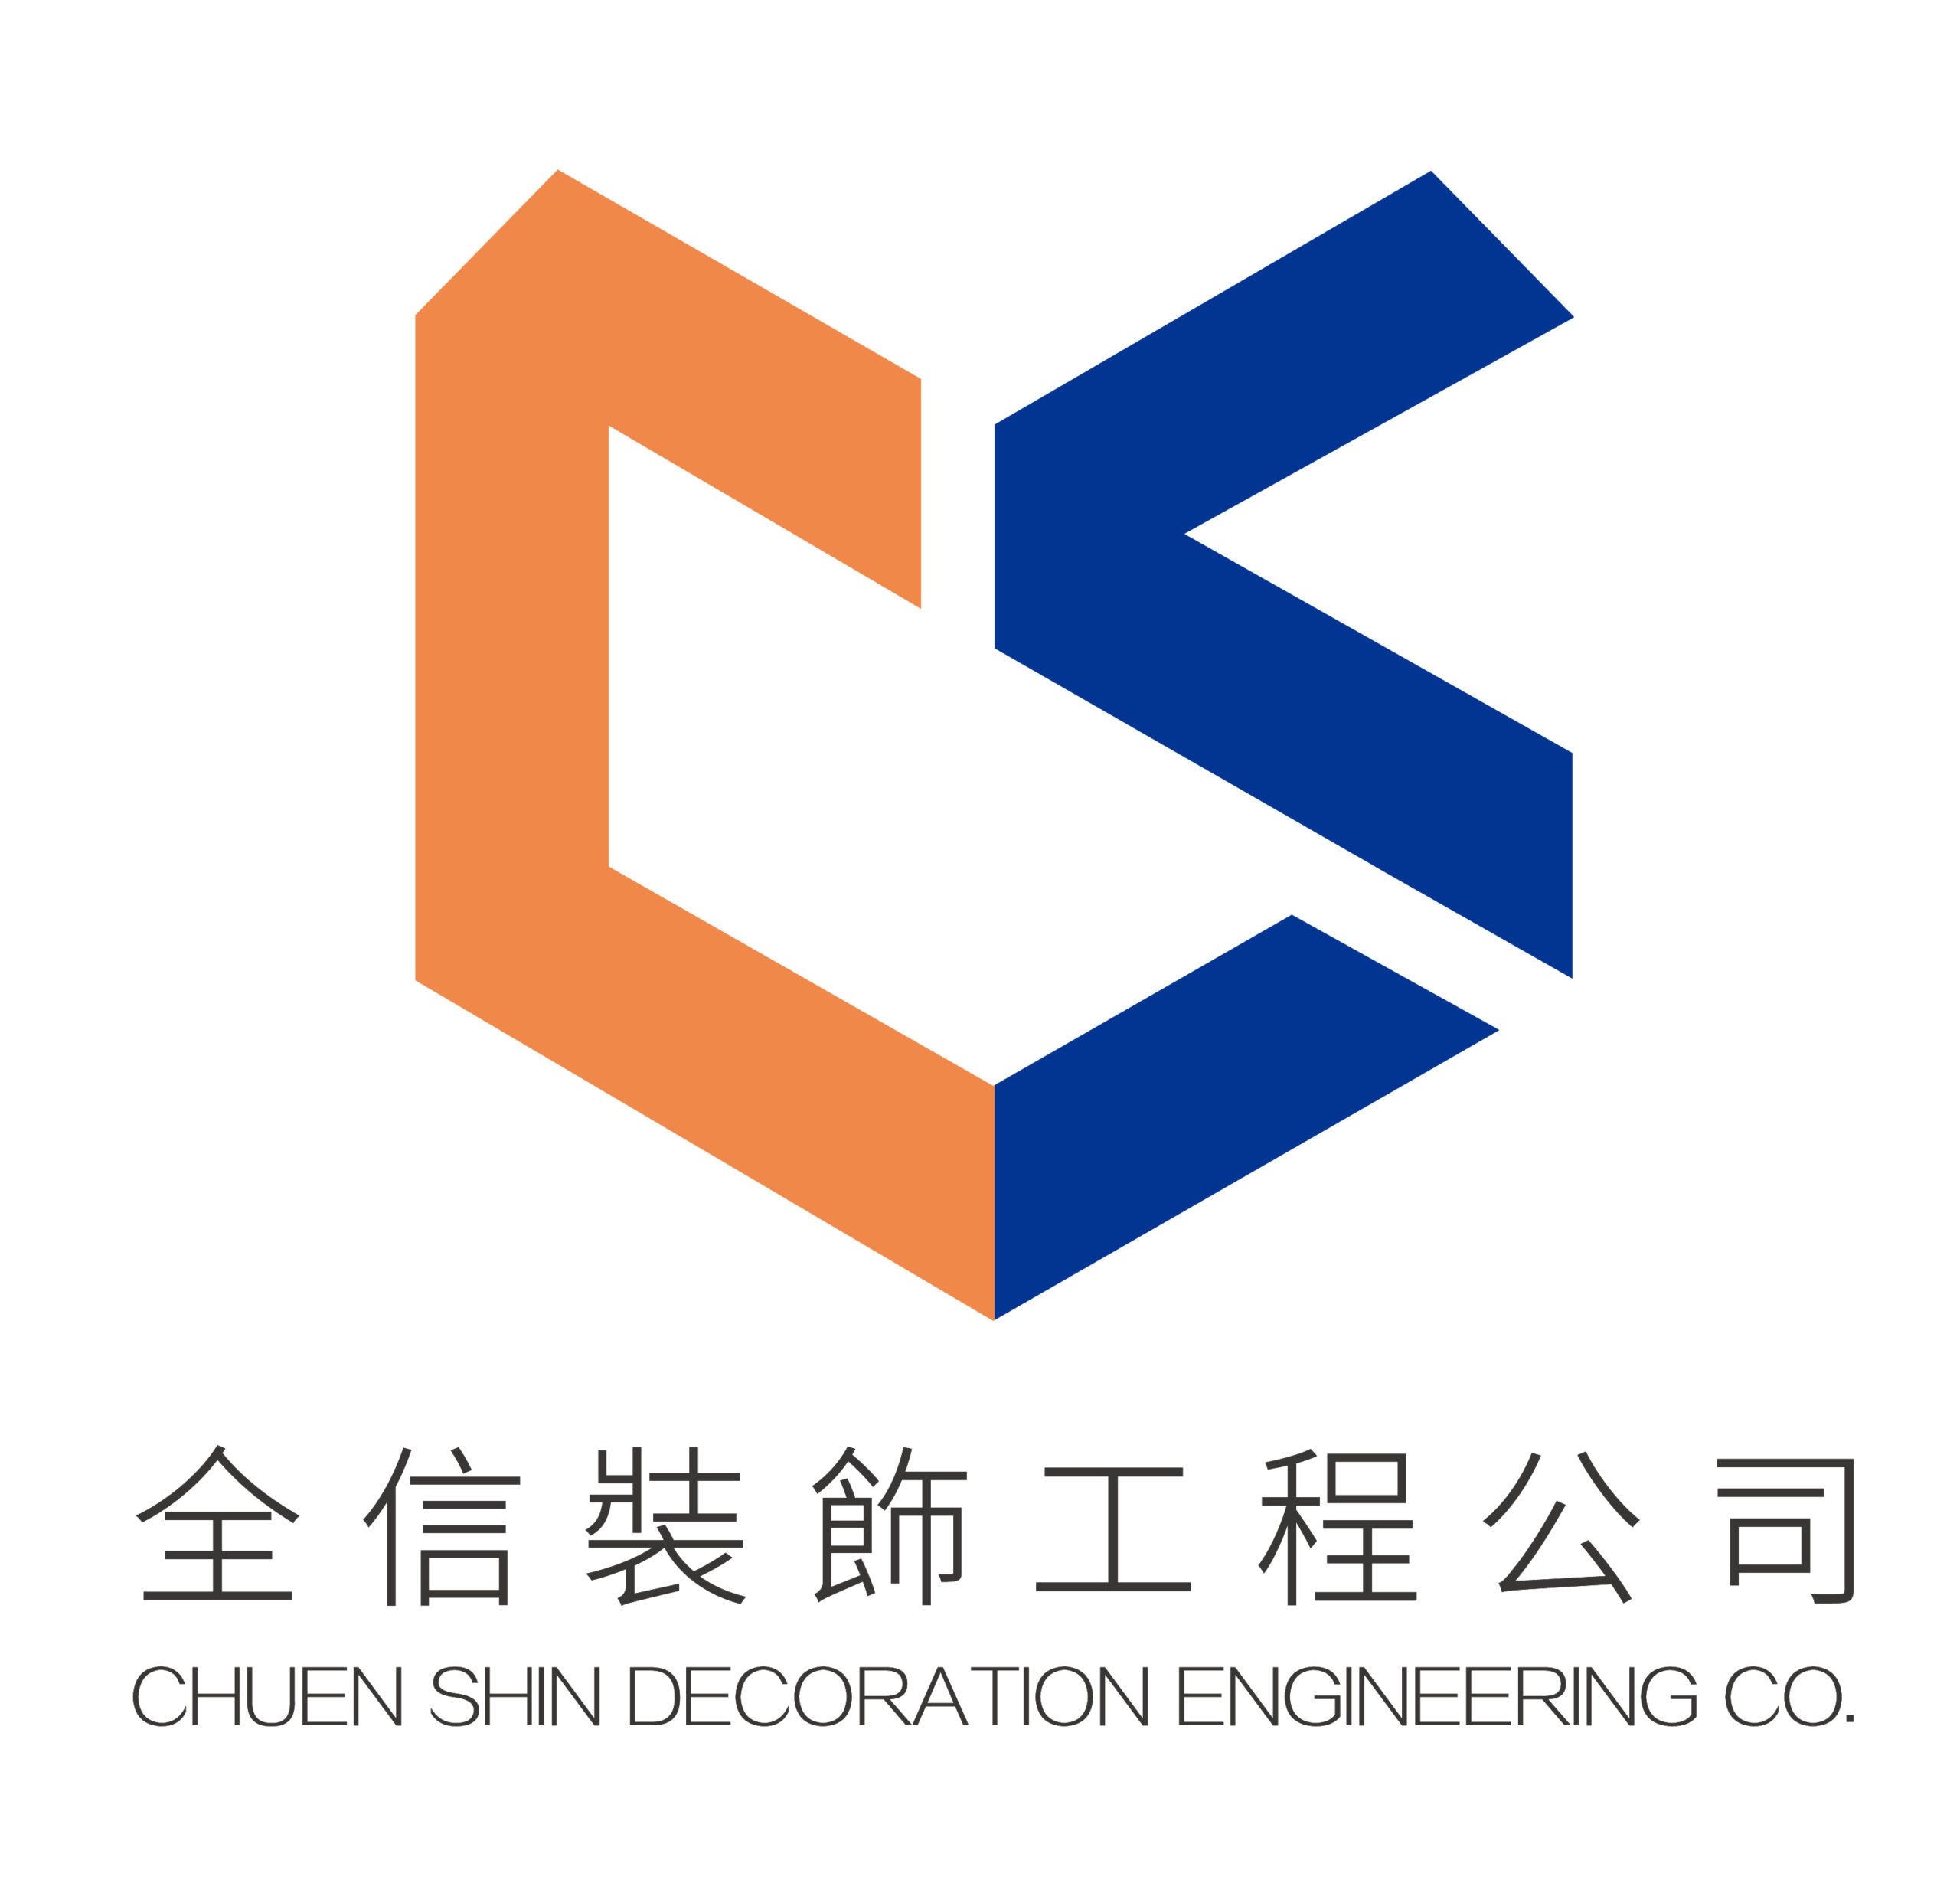 Chuen Shin Decoration Engineering Co. 全信裝飾工程公司